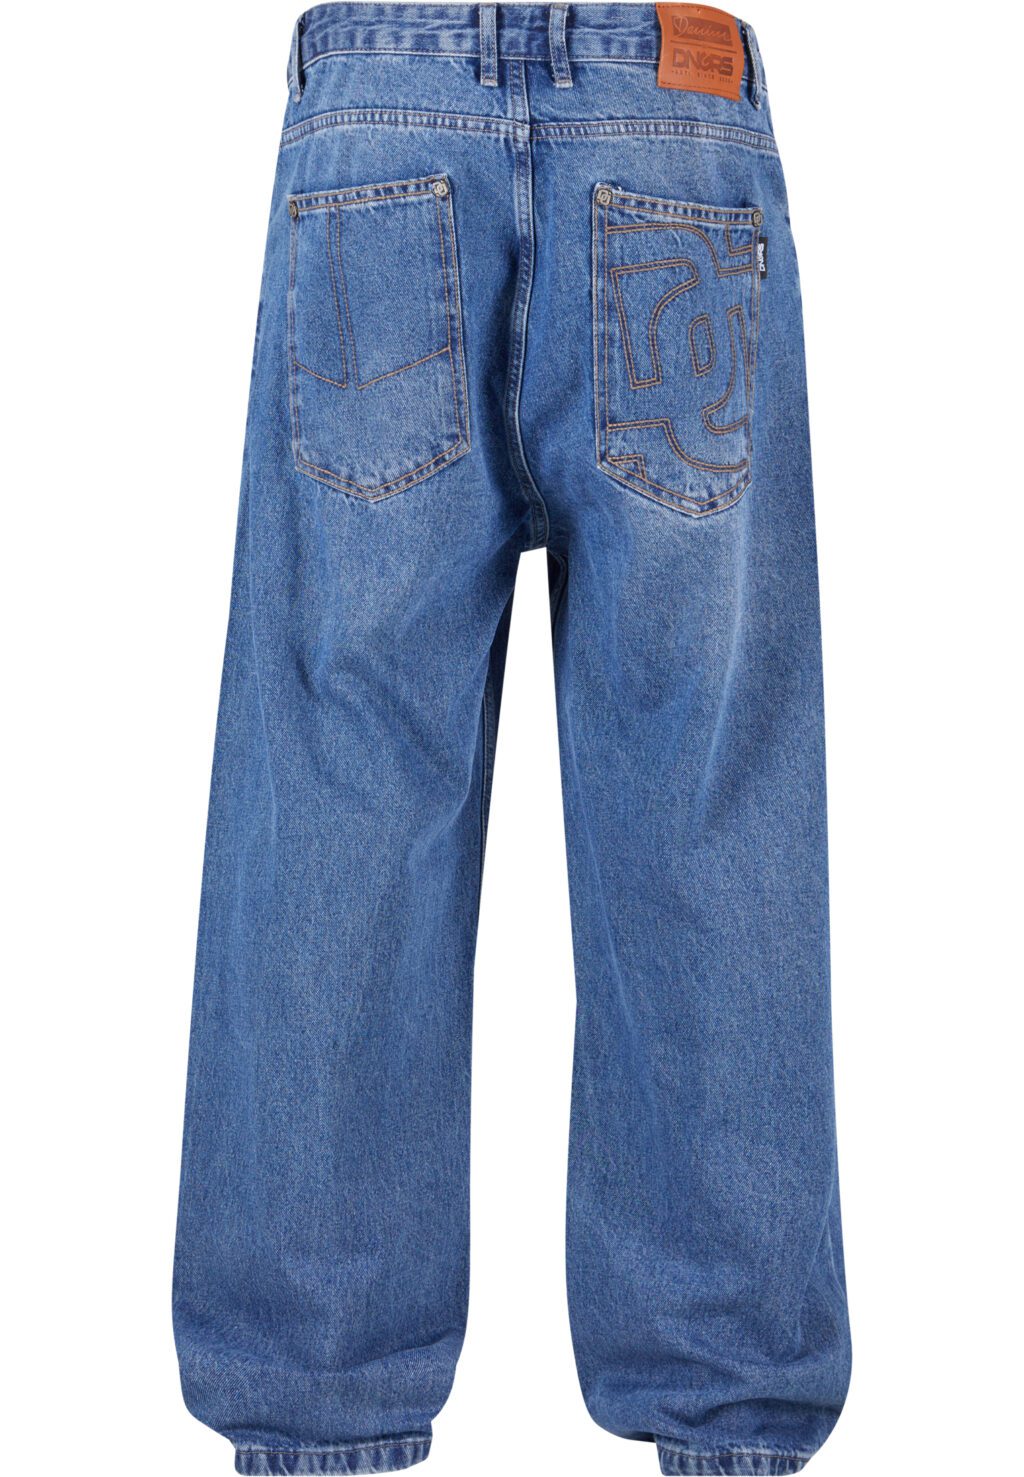 Homie Baggy Jeans Medium denimblue DGJS158